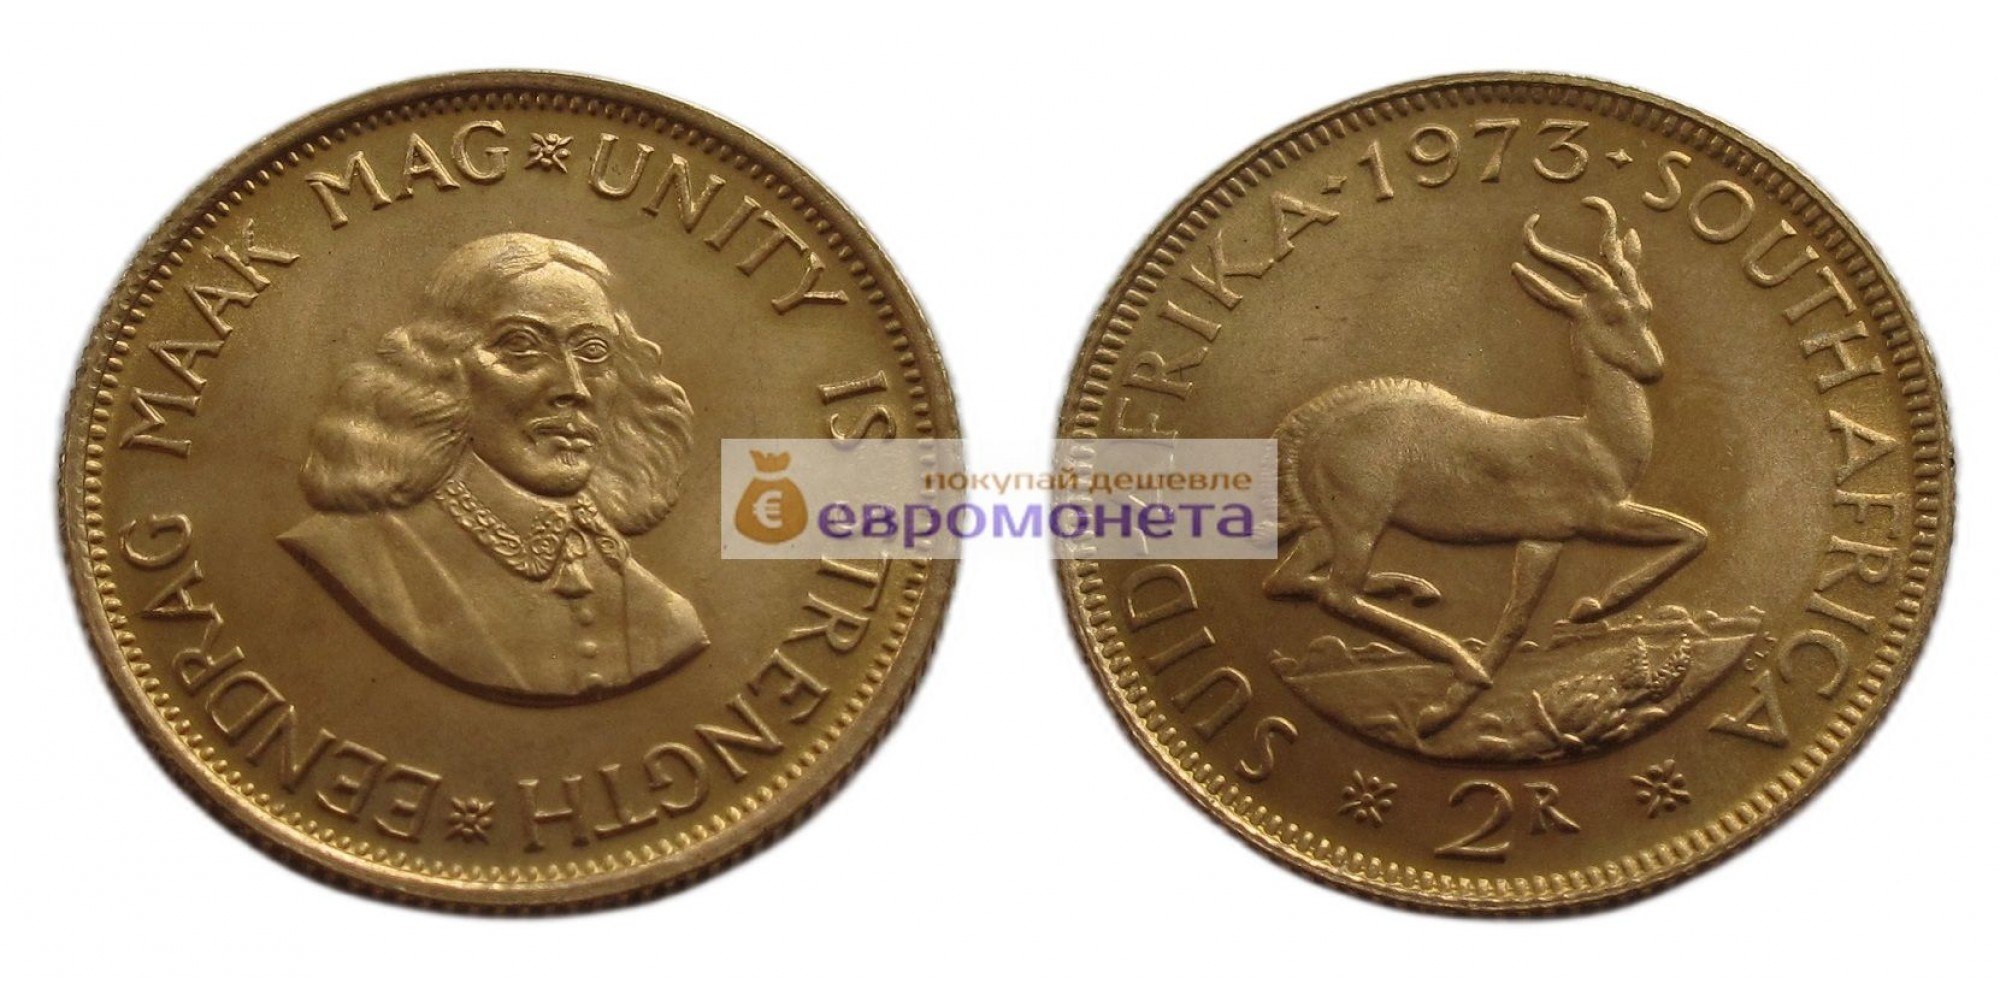 (ЮАР) Южно-Африканская Республика 2 ранда 1973 год. Золото 0.917 проба